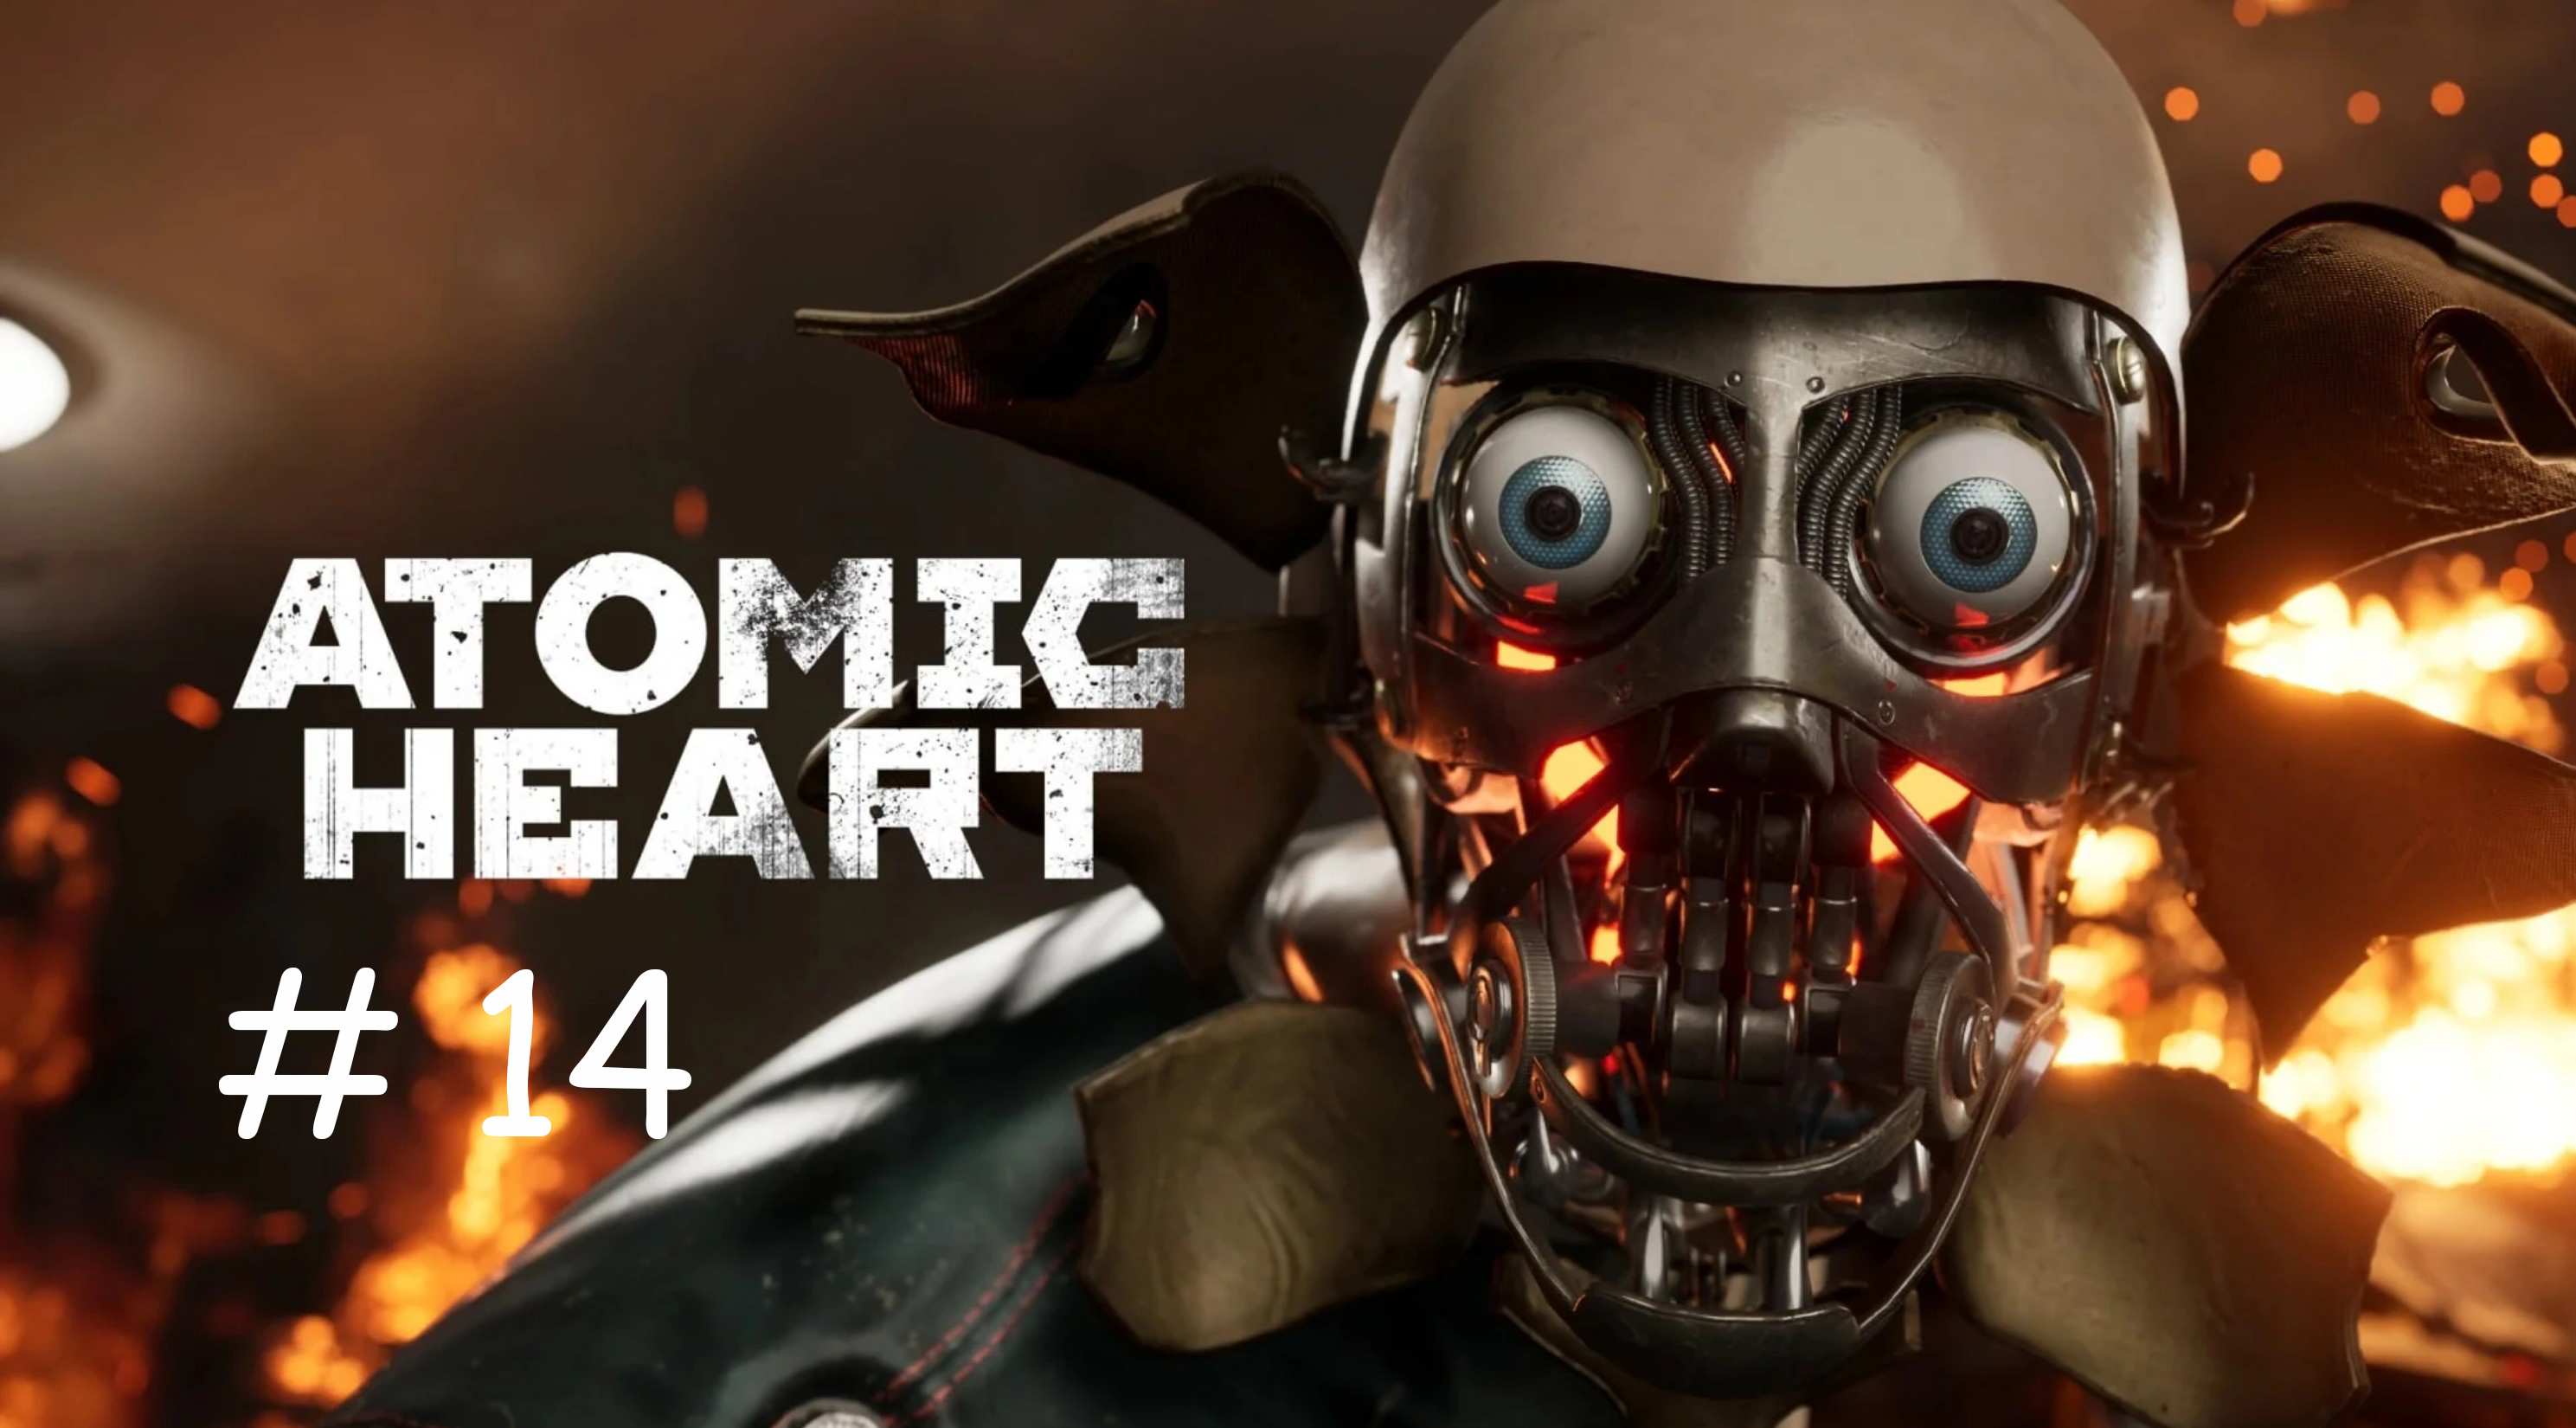 Atomic Heart # 14